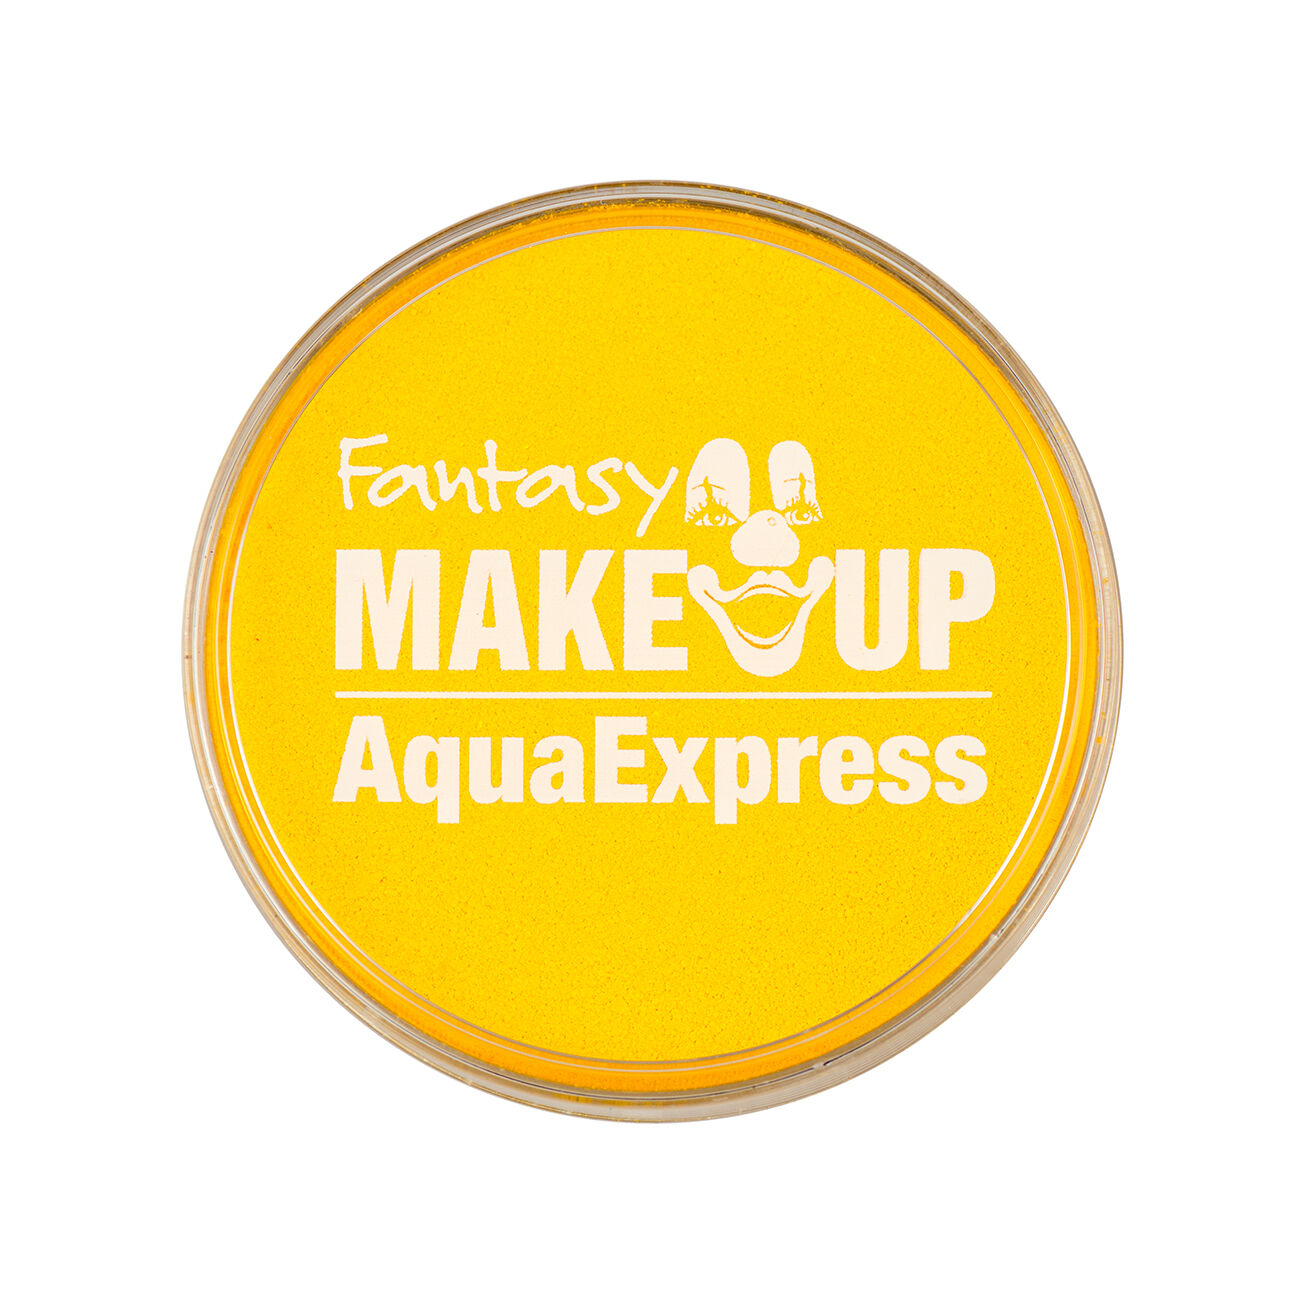 NEU Fantasy Aqua-Express Schminke auf Wasserbasis, 15g, Gelb